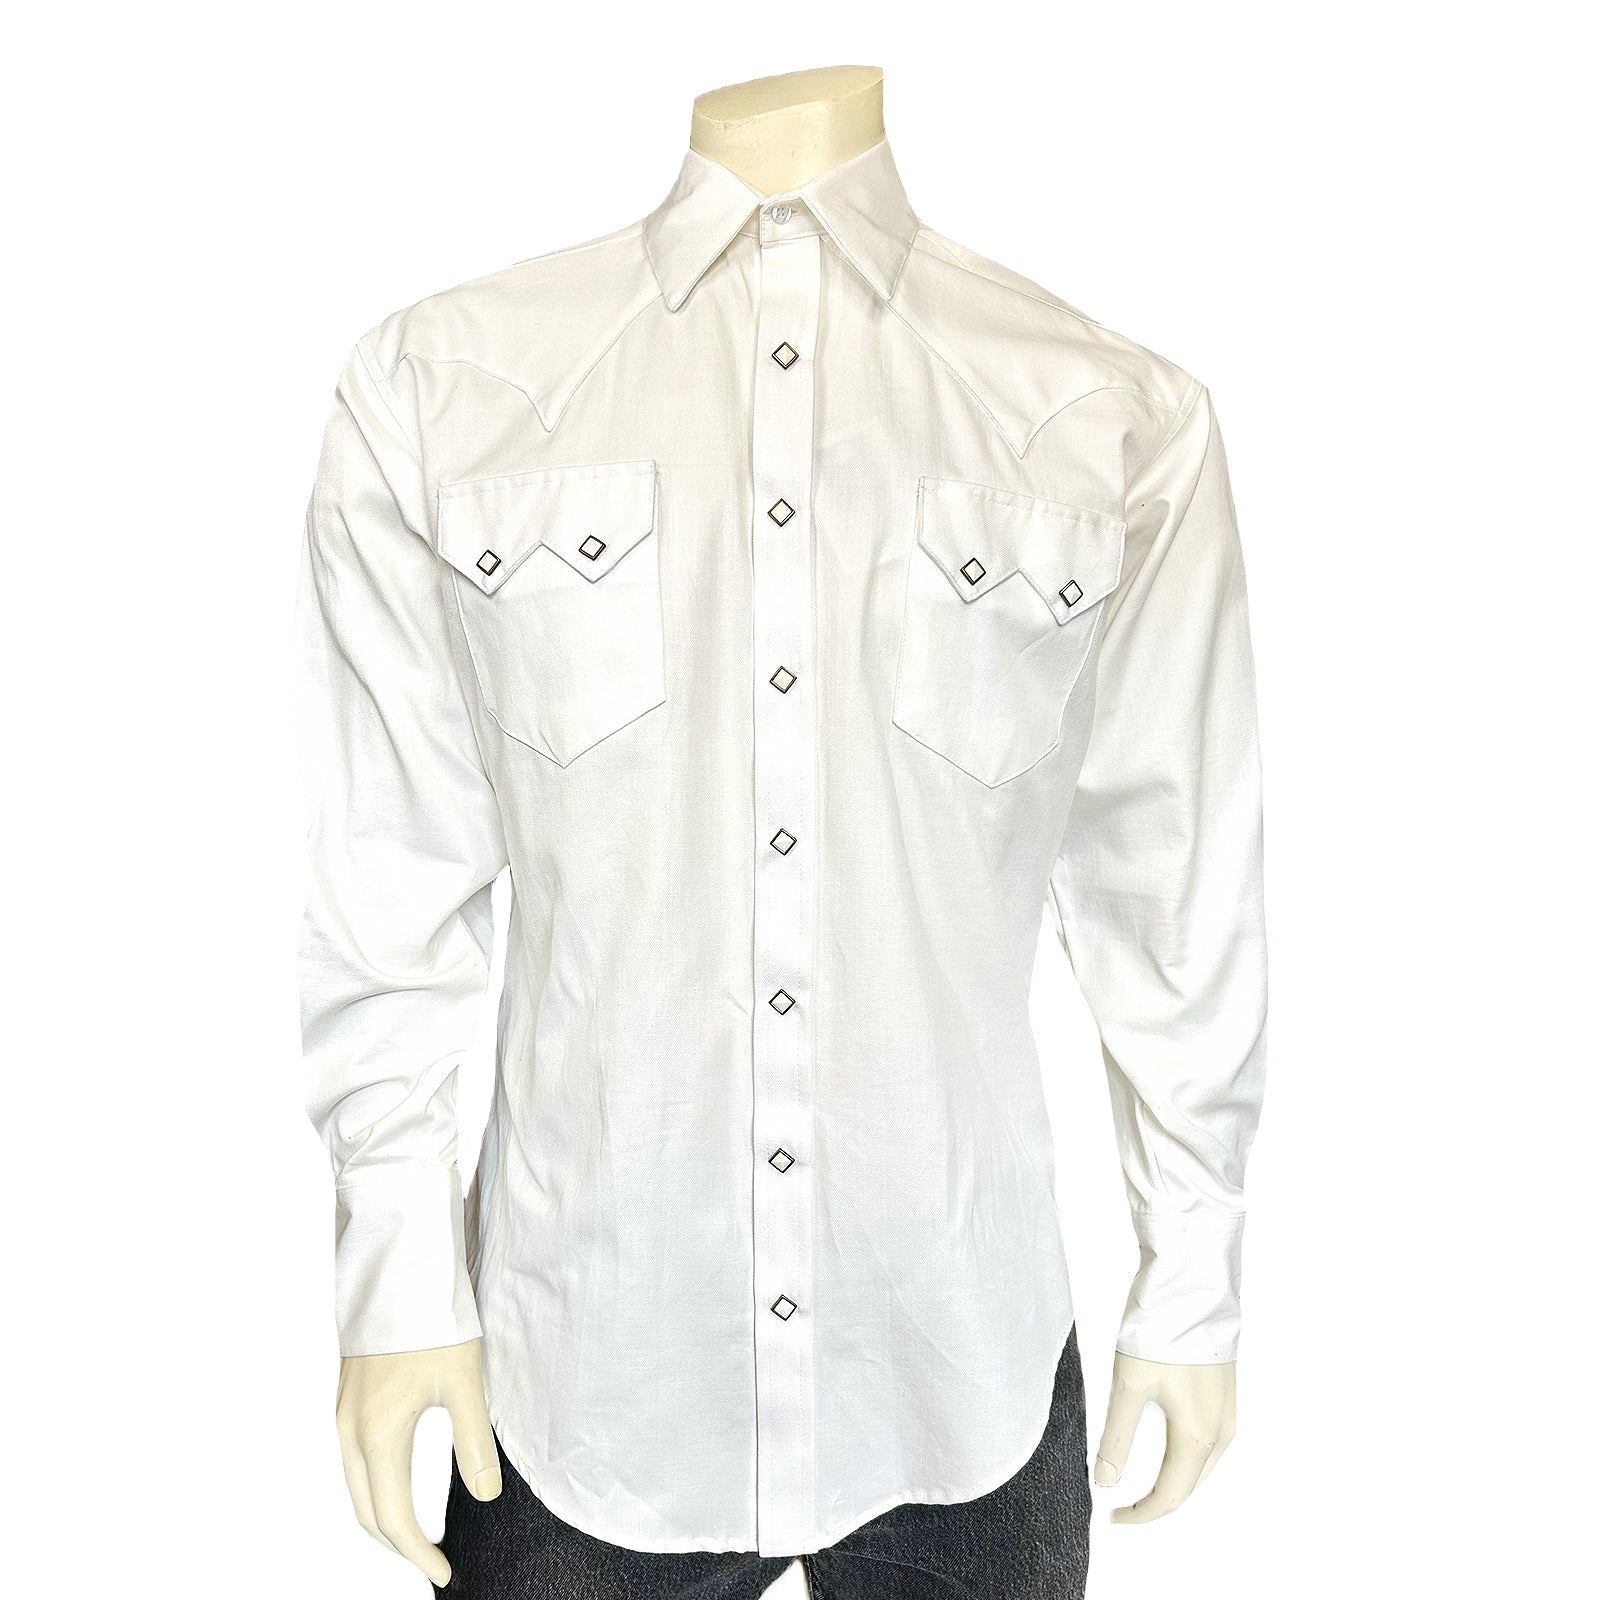 Men’s Extra-Fine Cotton White Oxford Western Shirt